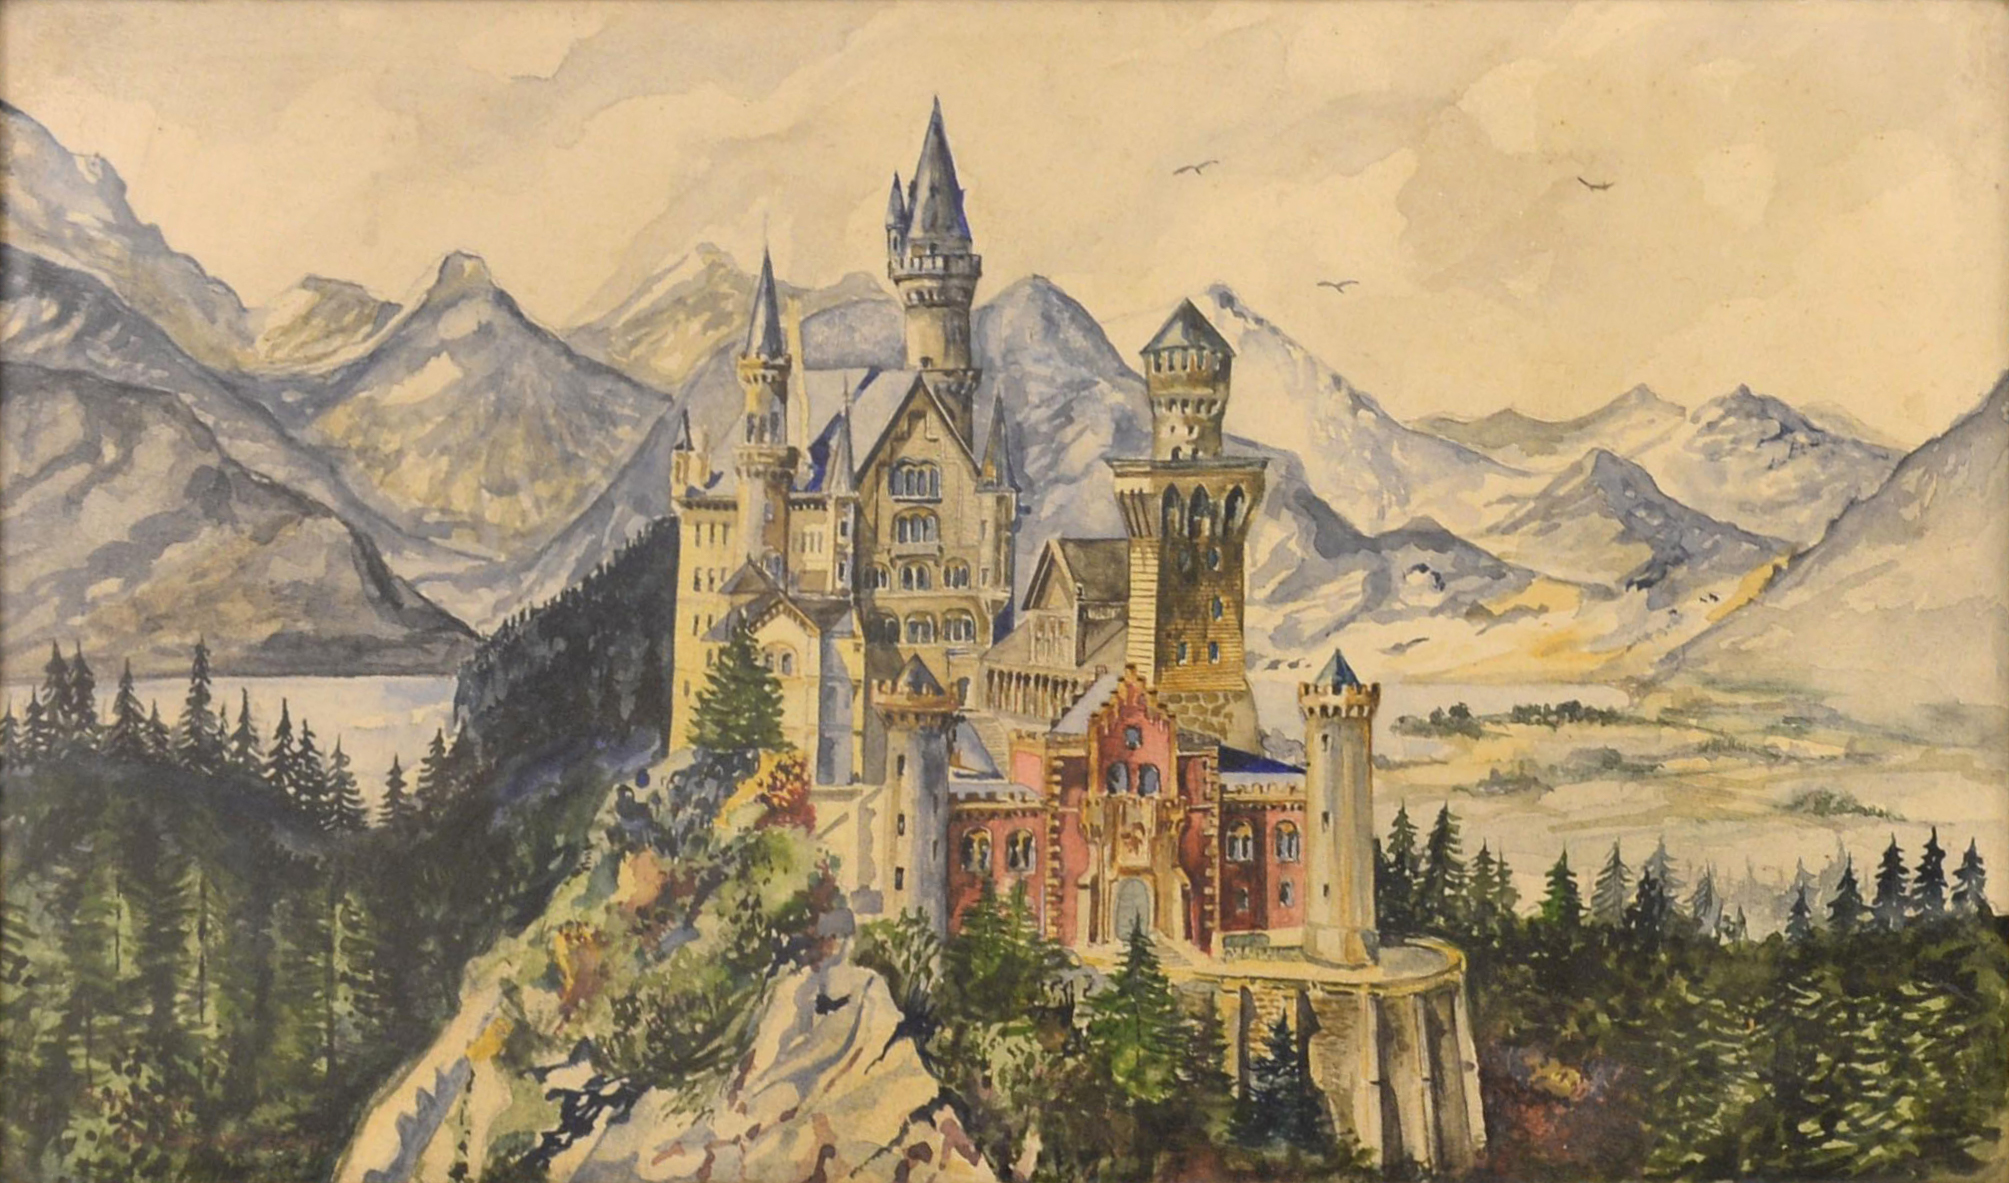 General 2009x1183 artwork painting fantasy castle castle forest mountains lake Neuschwanstein Castle nature trees sky